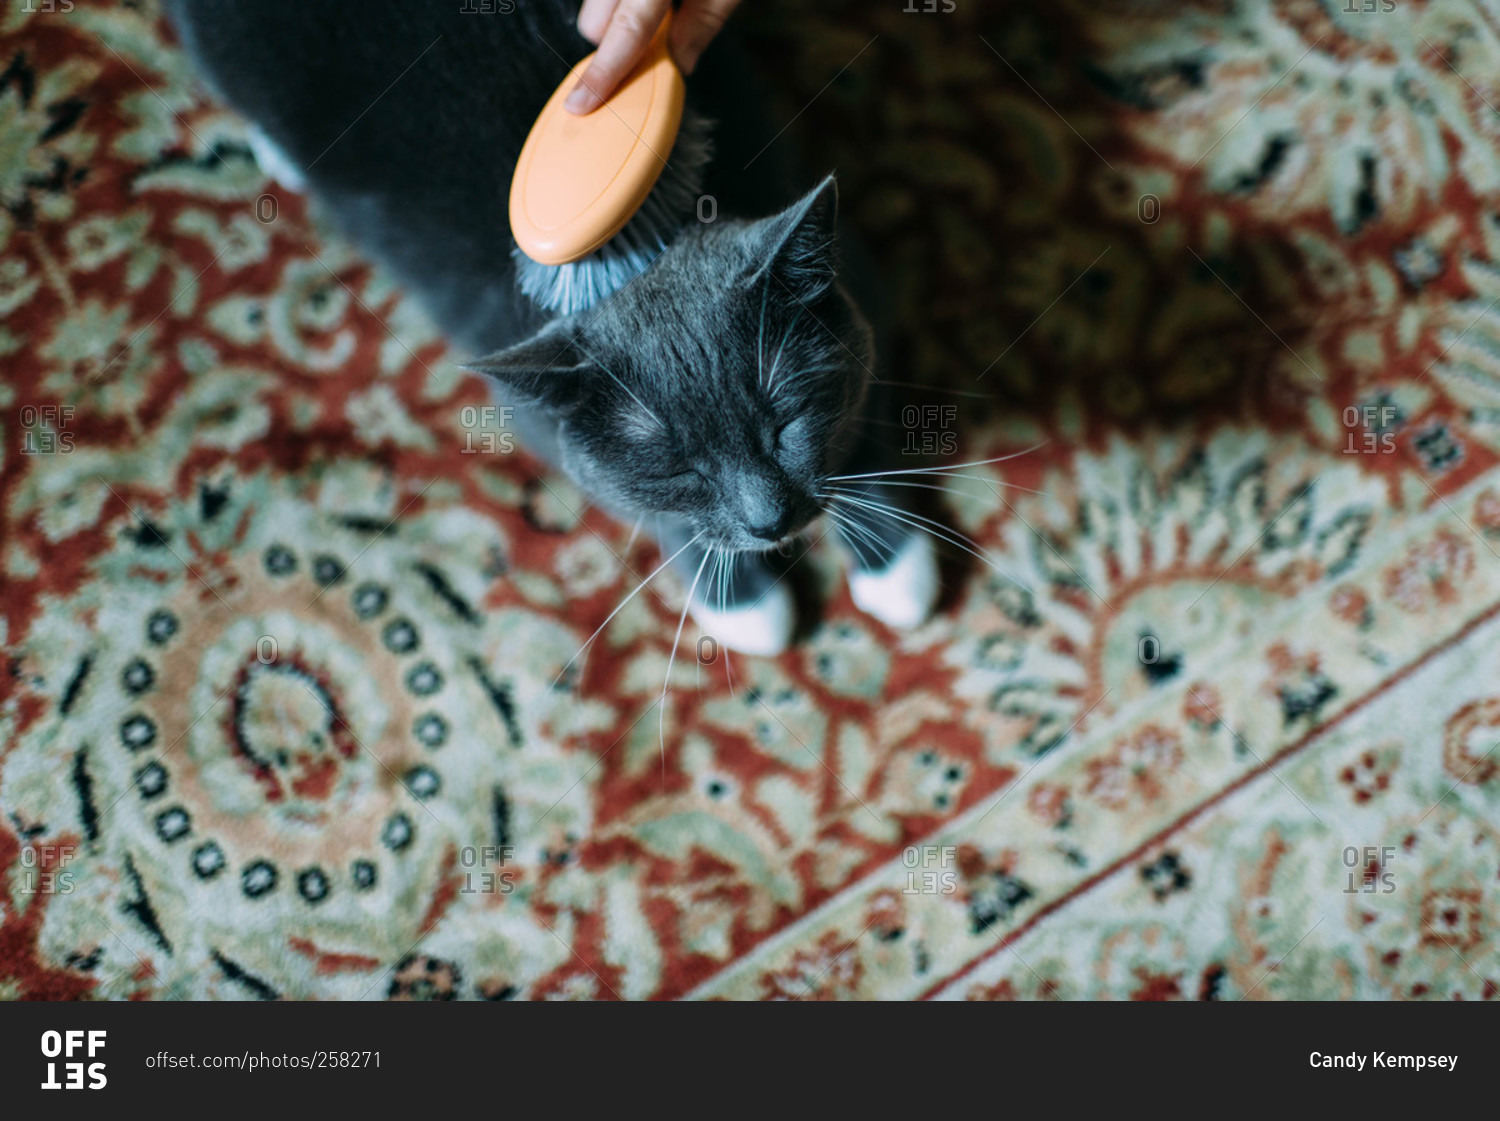 A cat enjoys a brushing